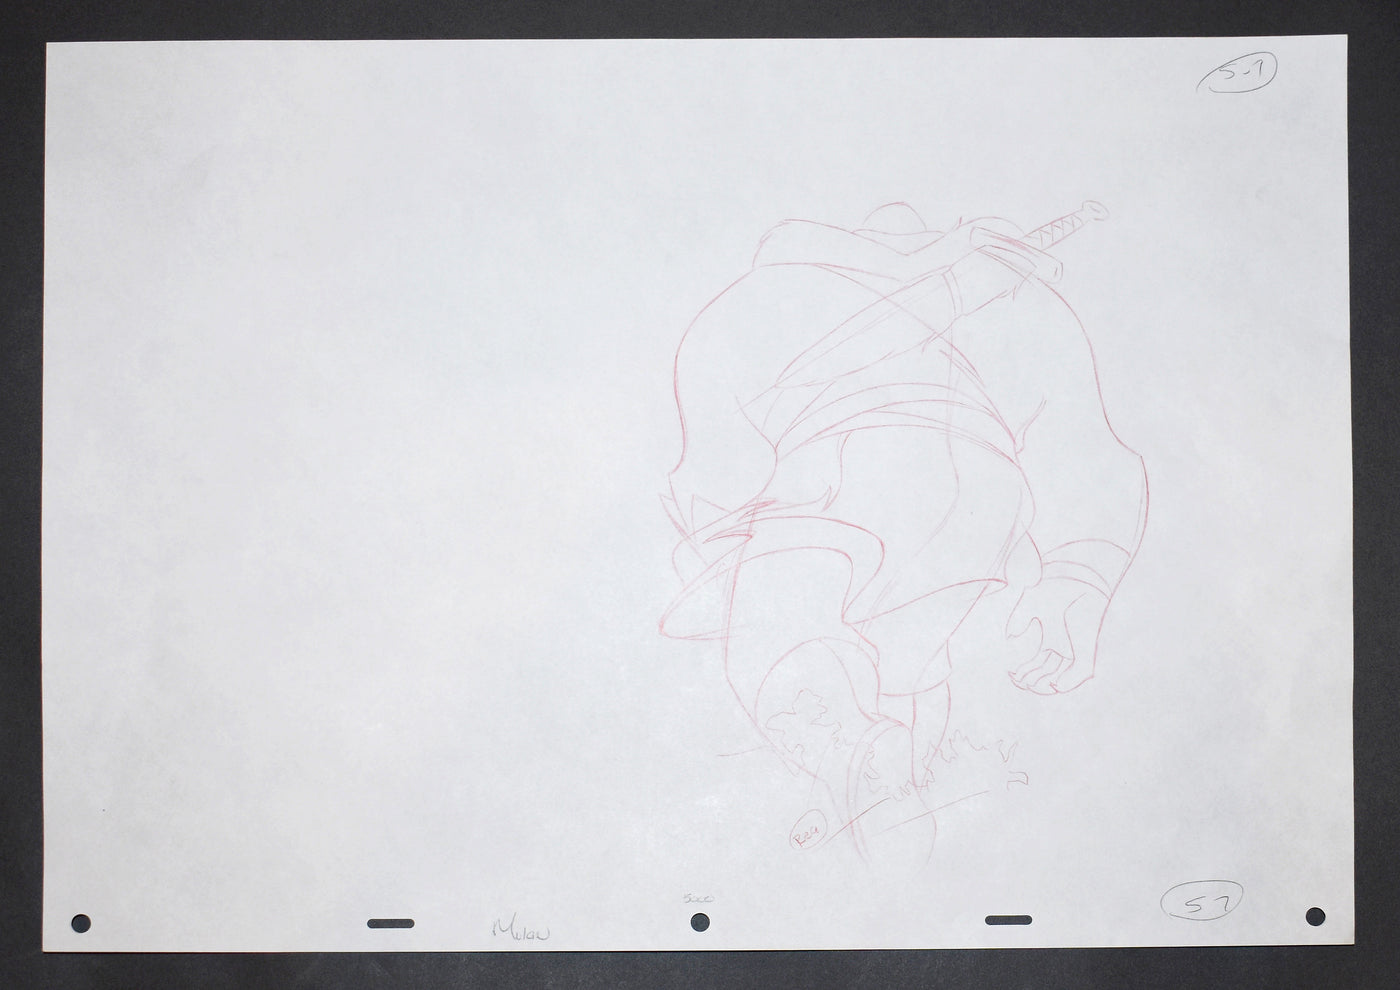 Original Walt Disney Production Drawing from Mulan (1998) featuring Shan Yu